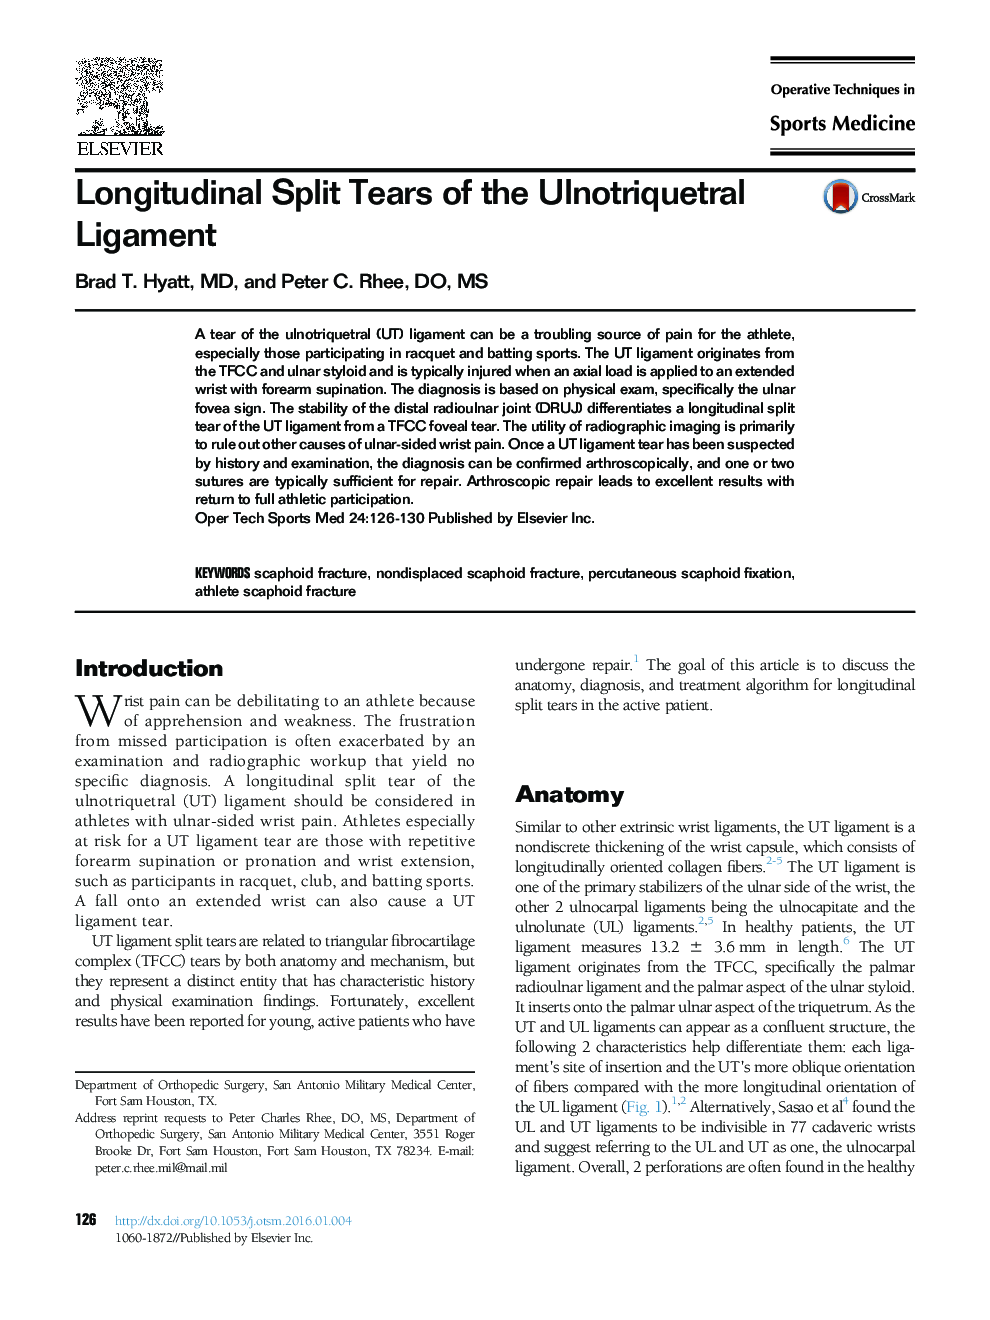 Longitudinal Split Tears of the Ulnotriquetral Ligament